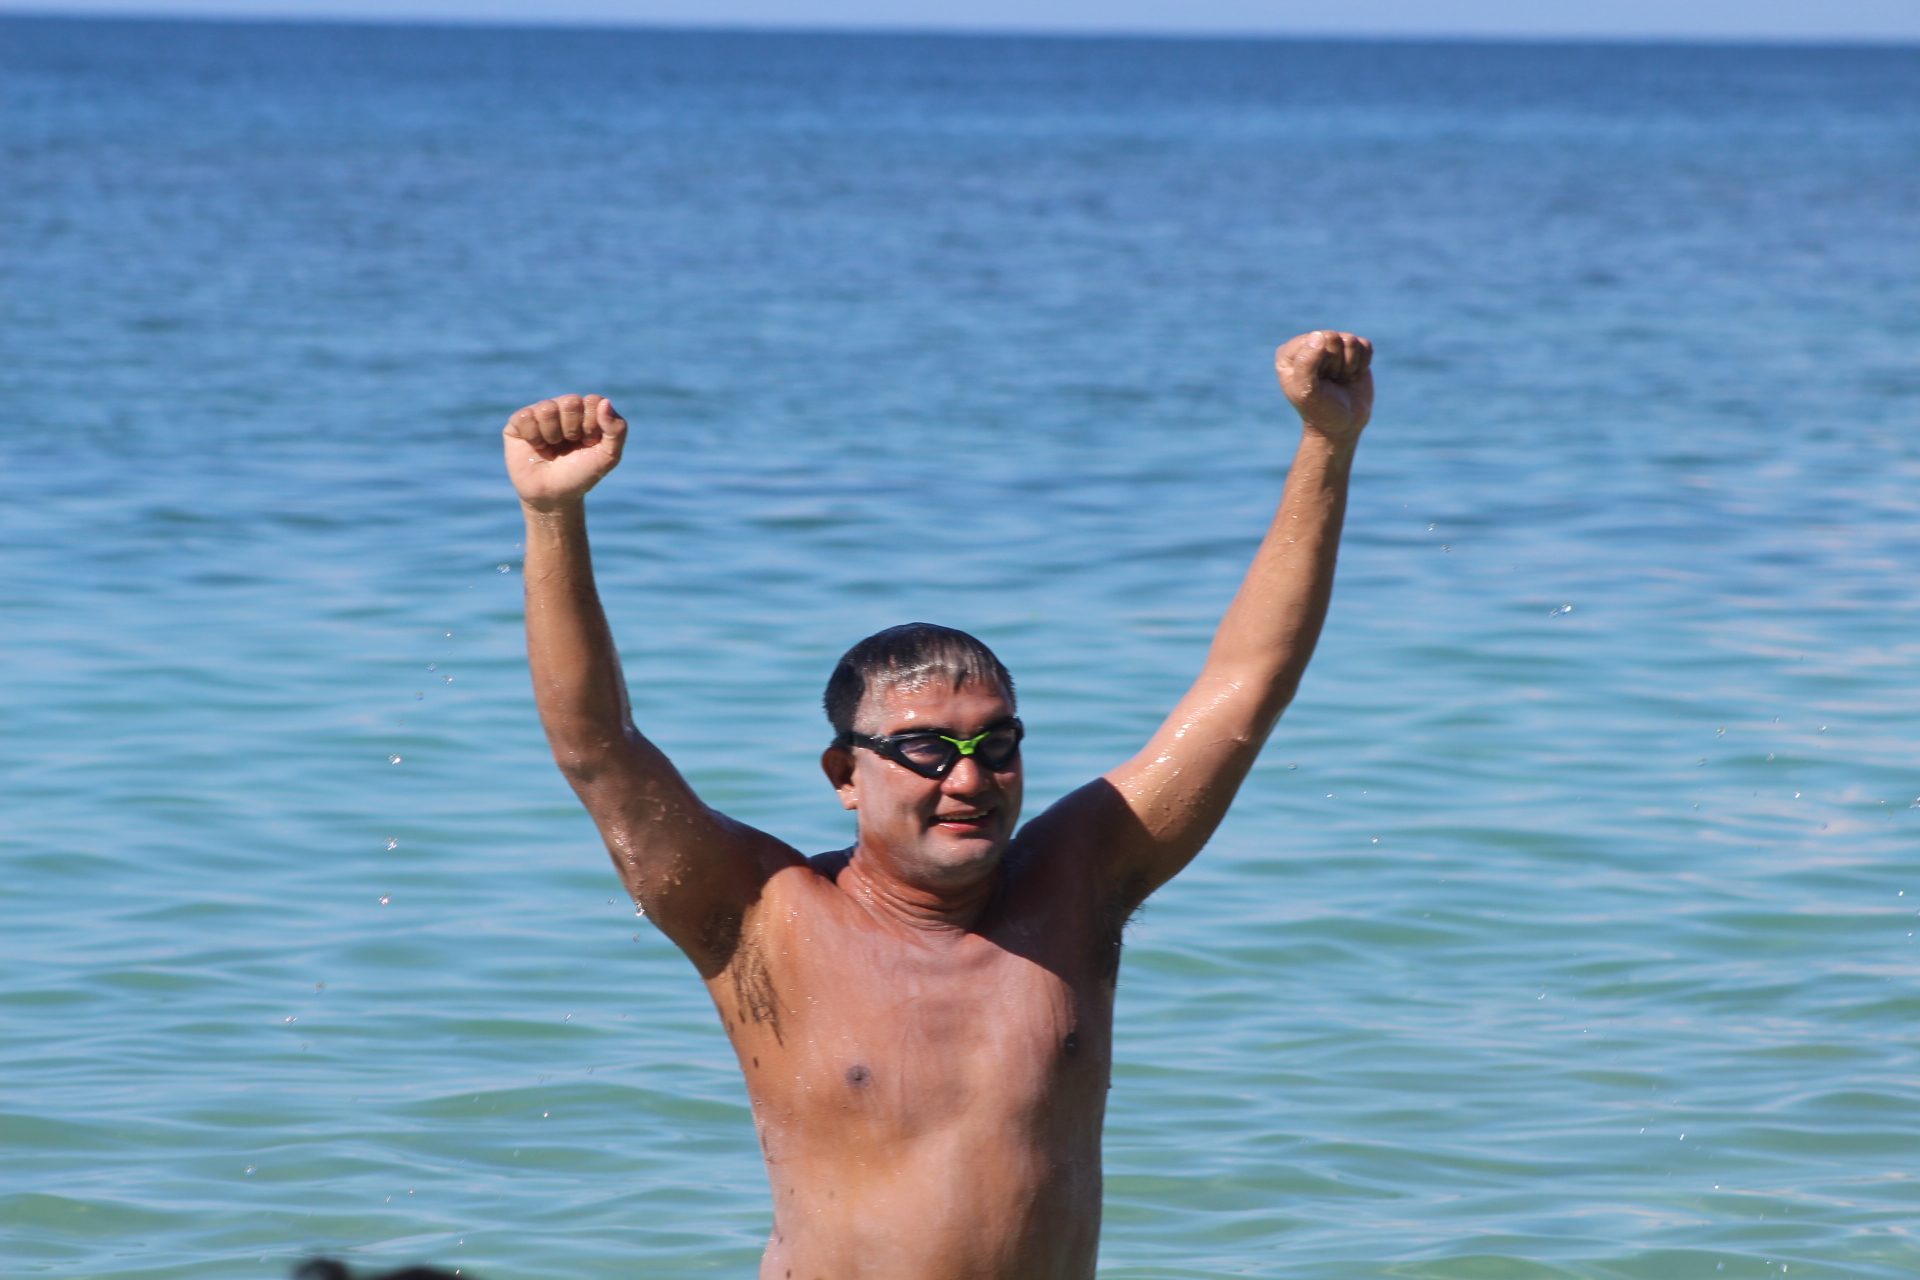 Winds, rough waters force ‘Pinoy Aquaman’ to cut short Lake Michigan swim